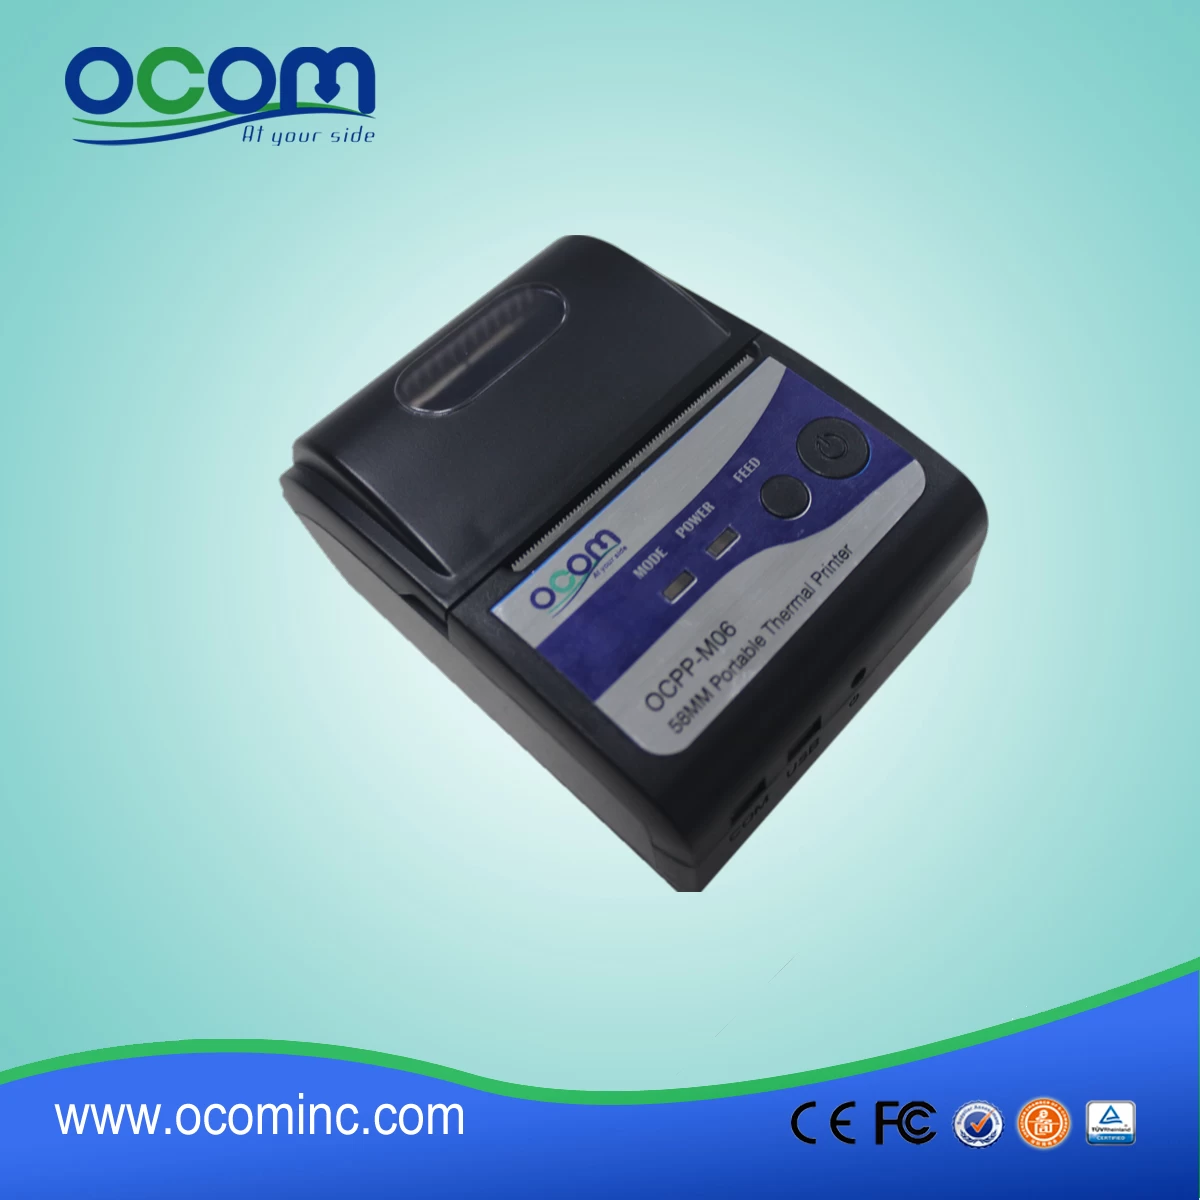 Ocpp-M06 China Mini USB Thermal Printer Manufacturer